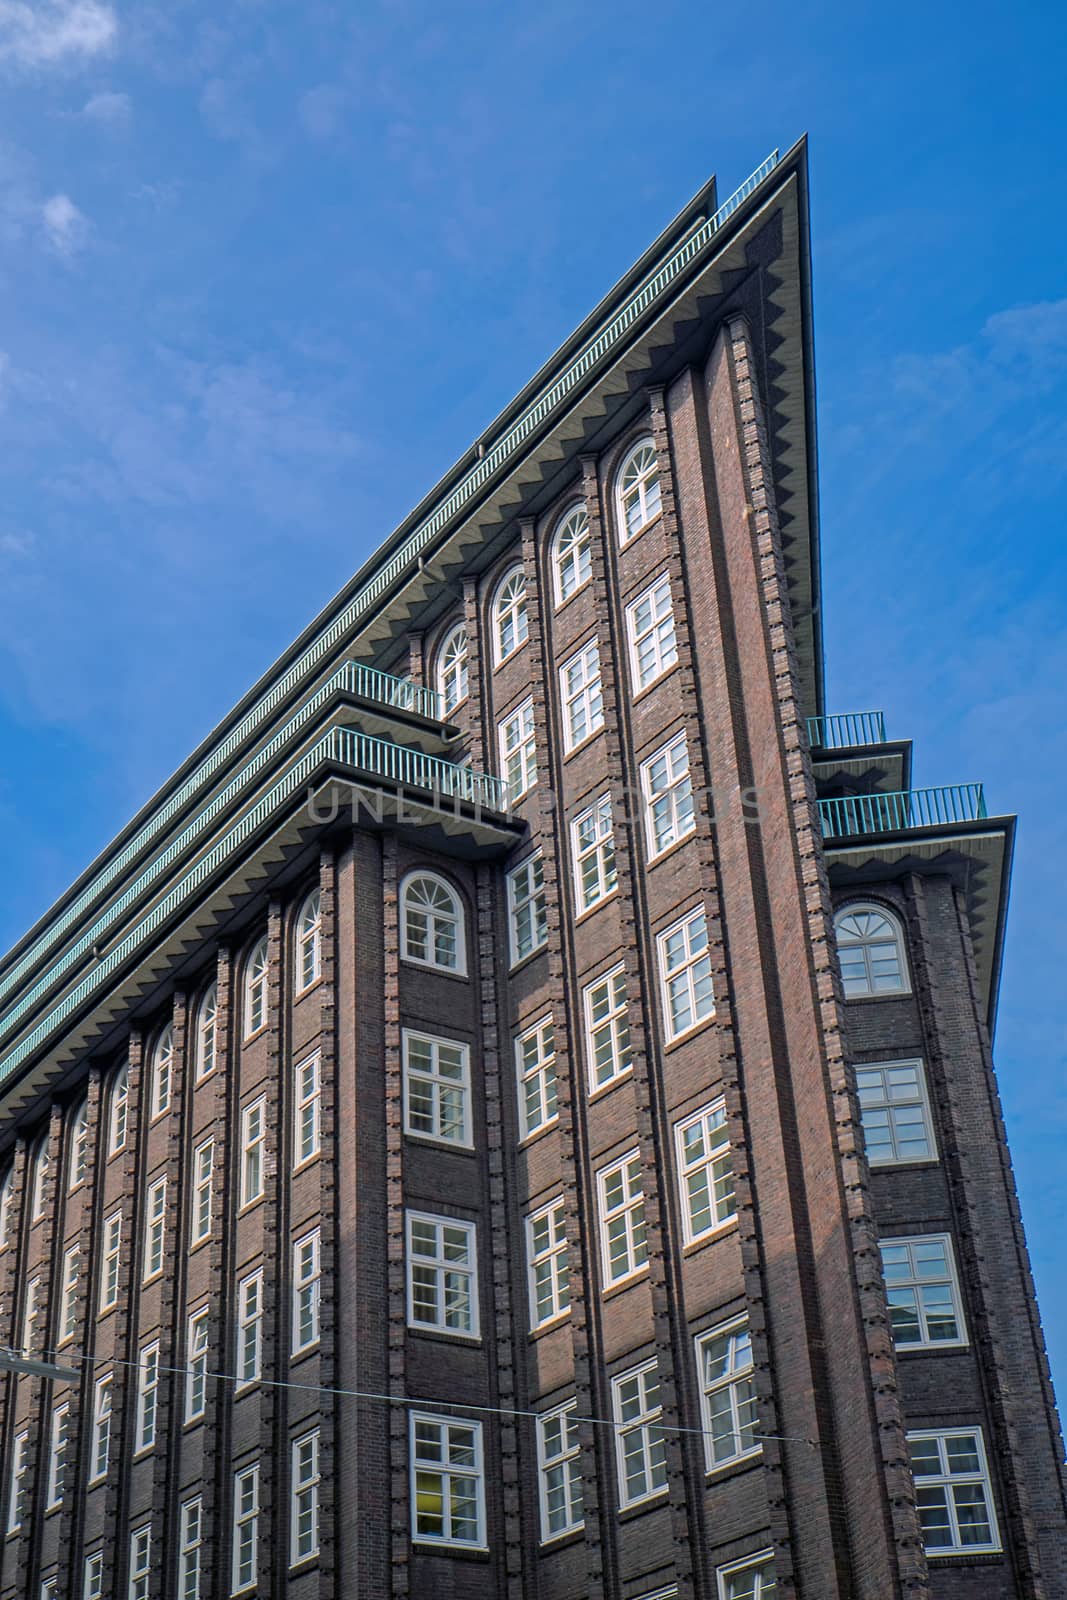 A characteristic building seen in Hamburg, Germany